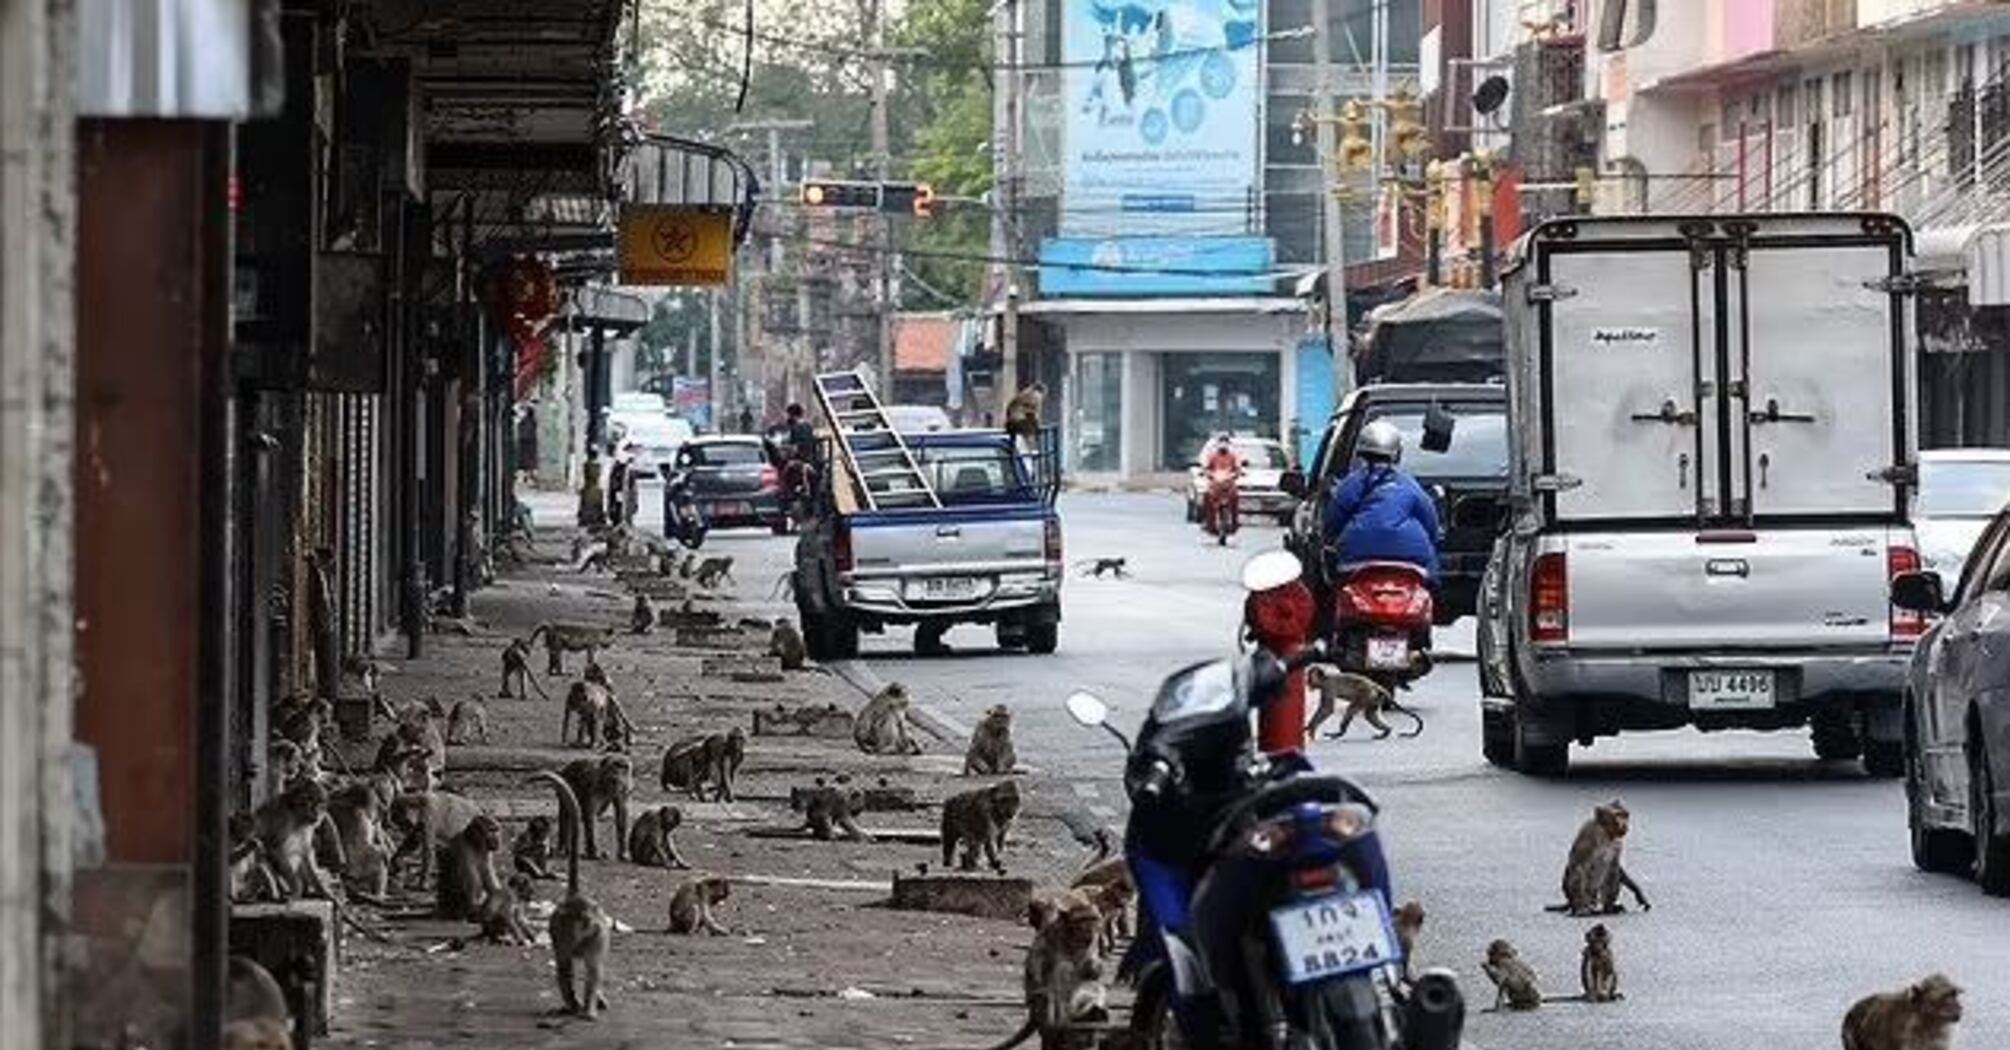 Police fight monkeys in Thailand